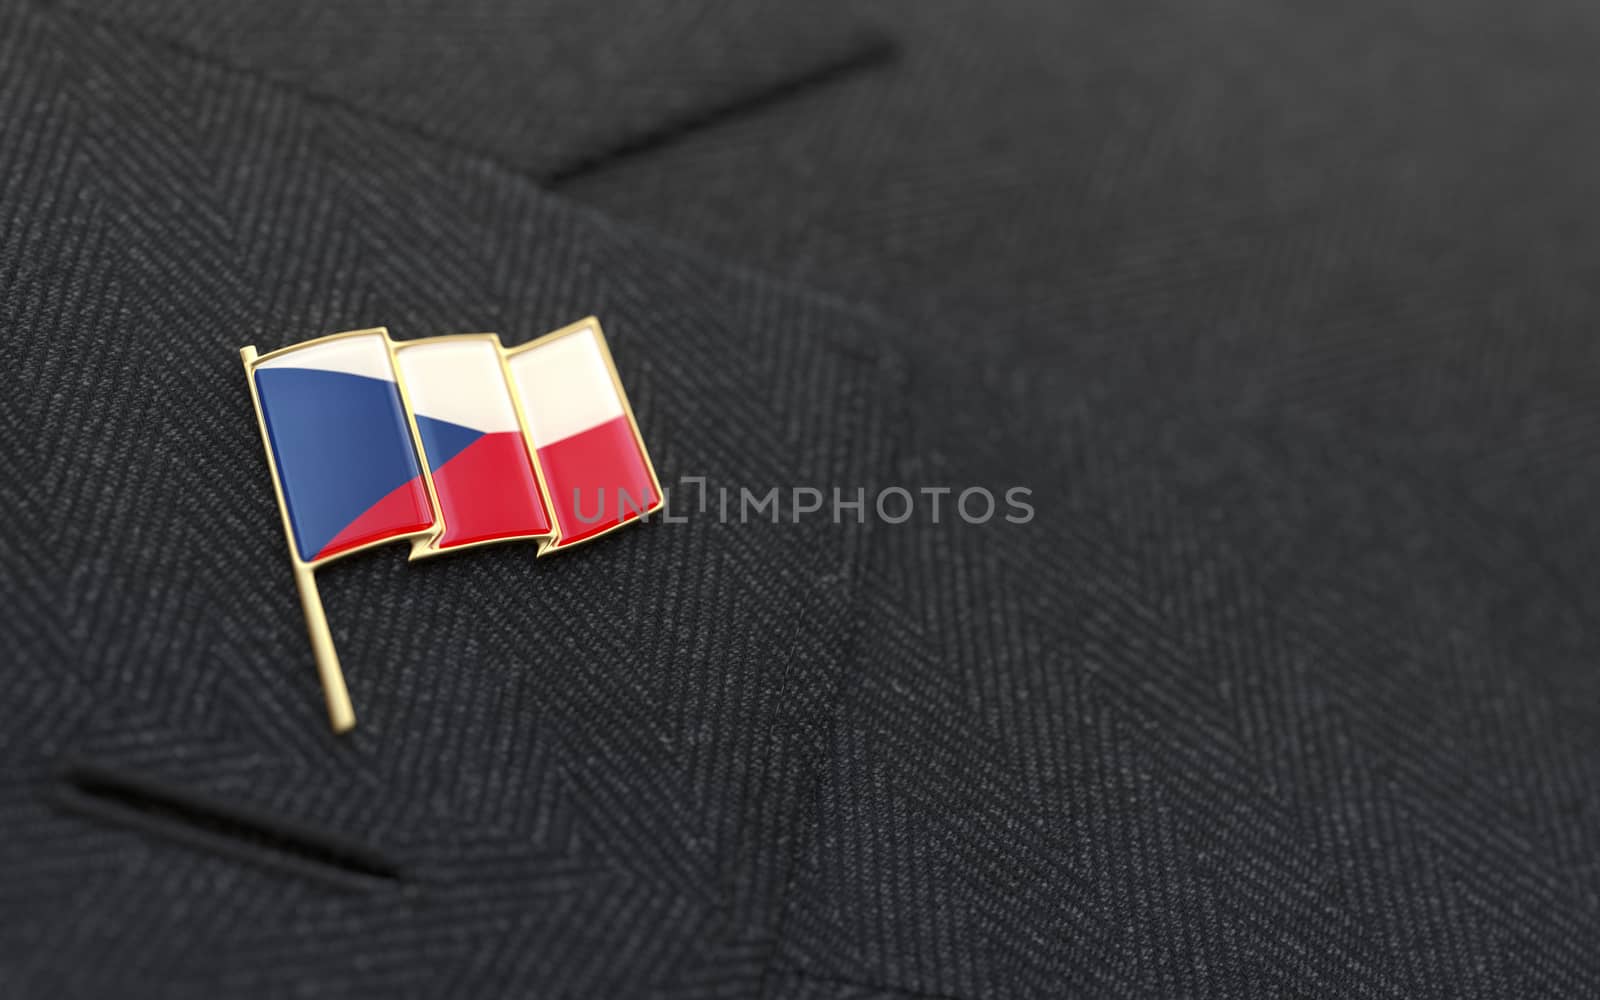 Czech Republic flag lapel pin on the collar of a business suit jacket shows patriotism